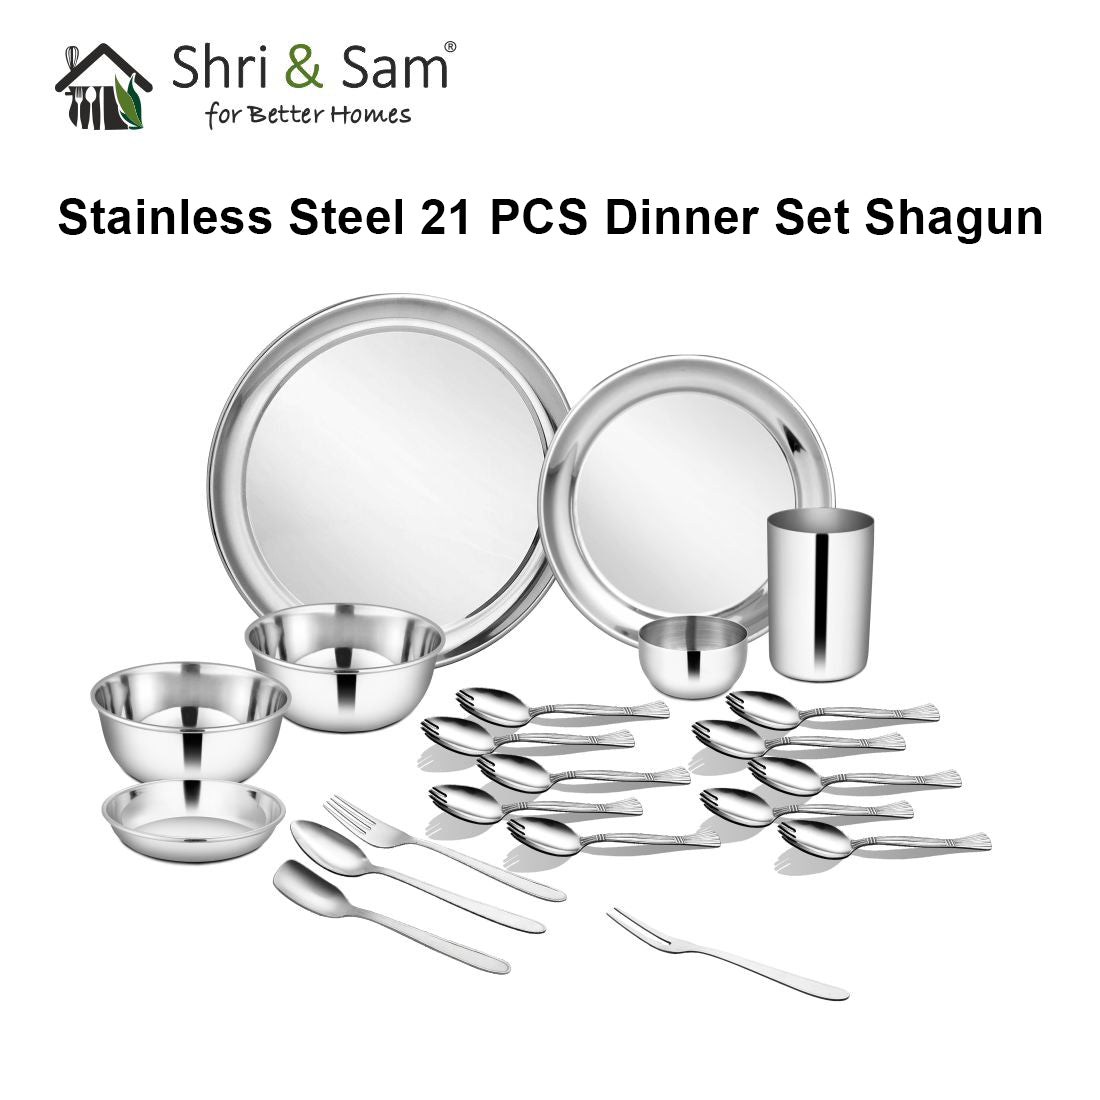 Stainless Steel 21 PCS Dinner Set (1 Person) Shagun